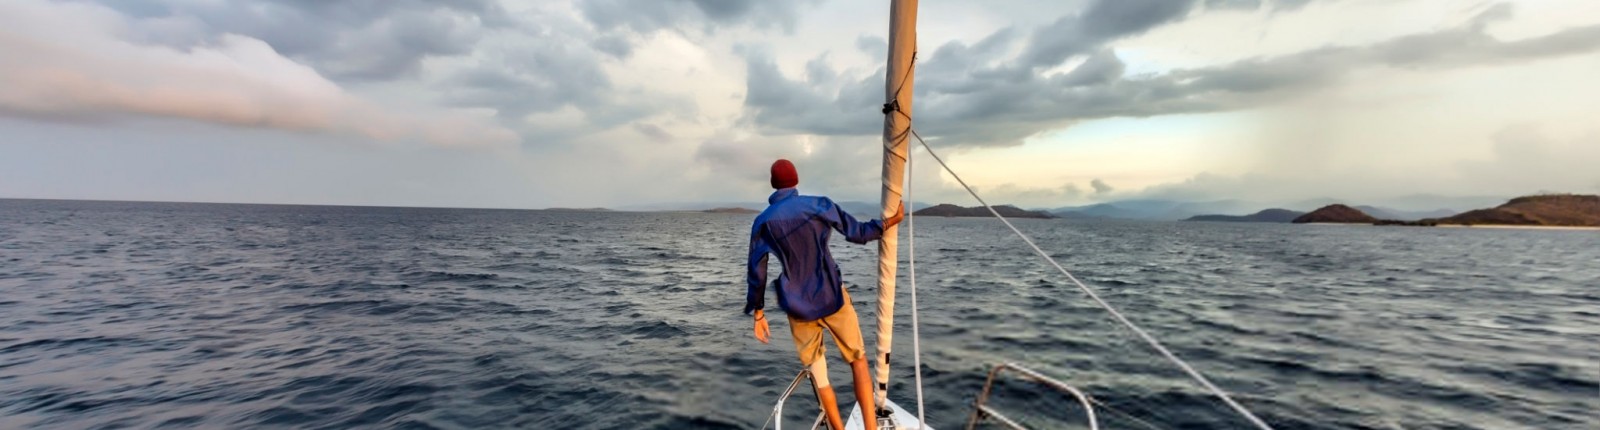 Man on sailing boat